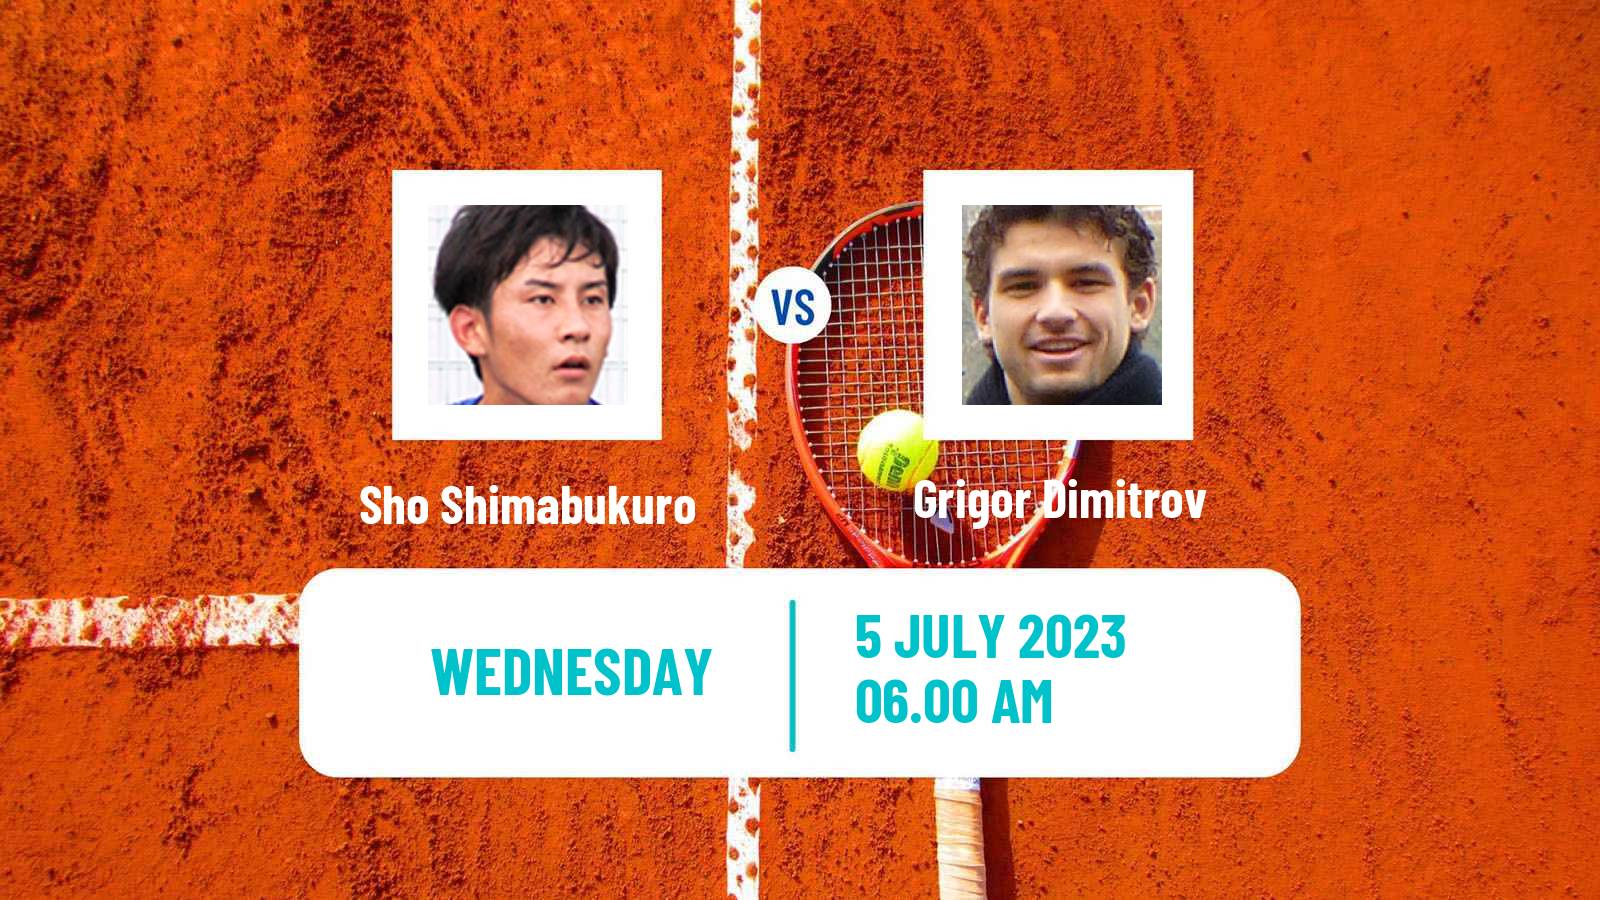 Tennis ATP Wimbledon Sho Shimabukuro - Grigor Dimitrov